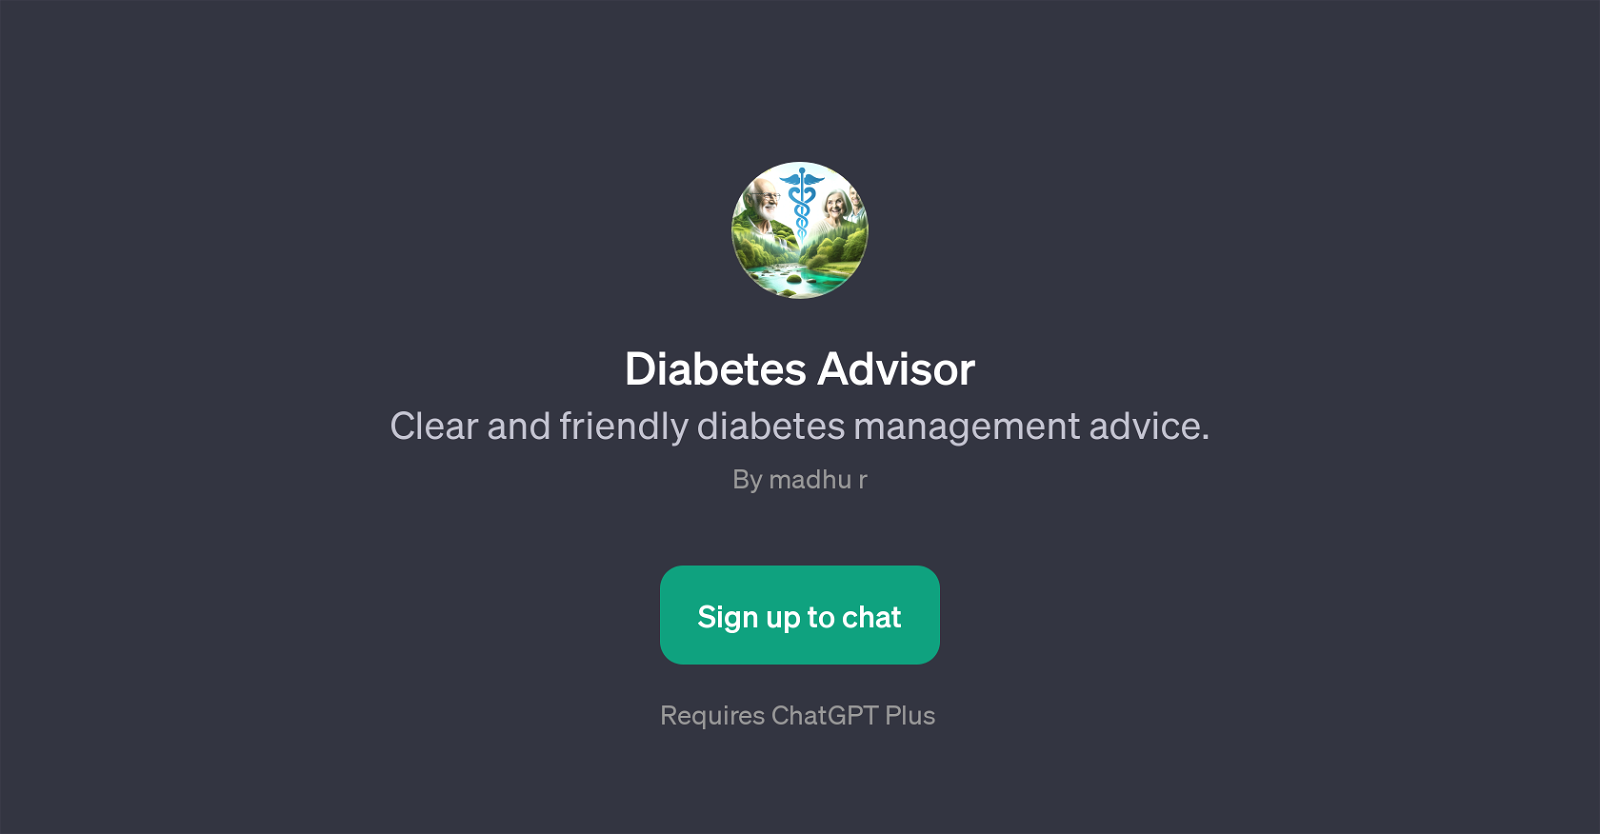 Diabetes Advisor website